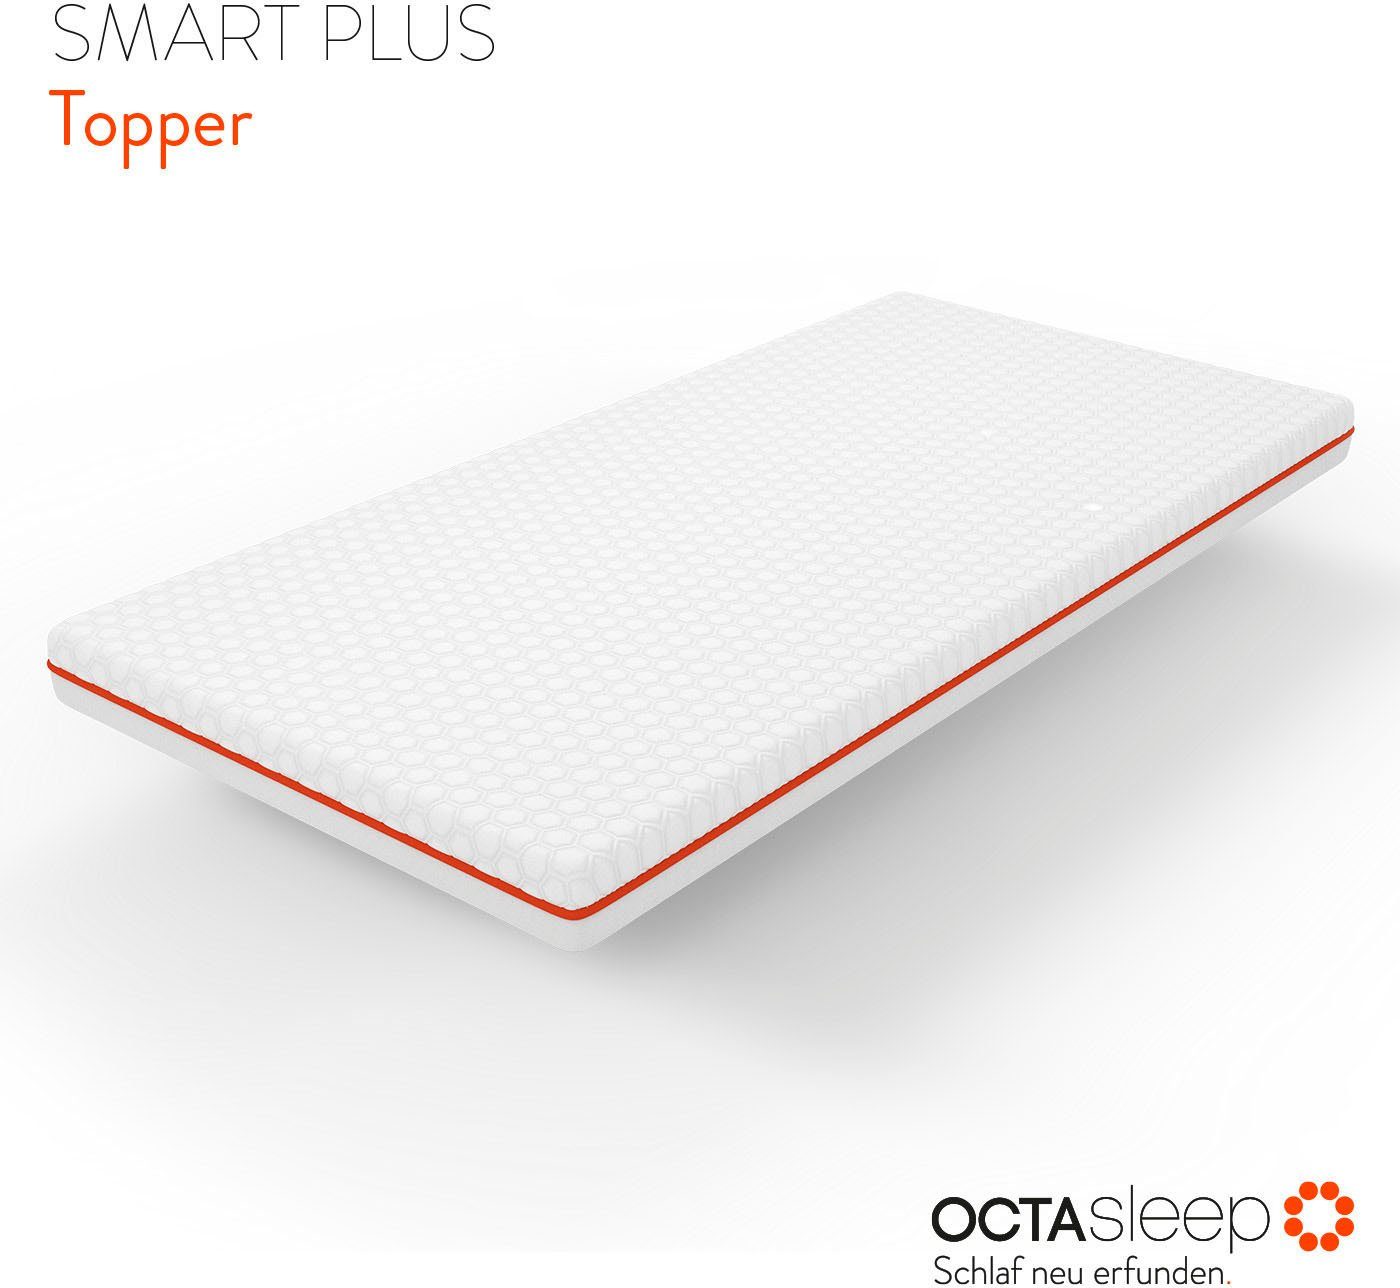 Topper Octasleep Smart Plus Topper, OCTAsleep, 7 cm hoch, Kaltschaum,  Komfortschaum, Viscoschaum, OCTAspring® Aerospace Technologie